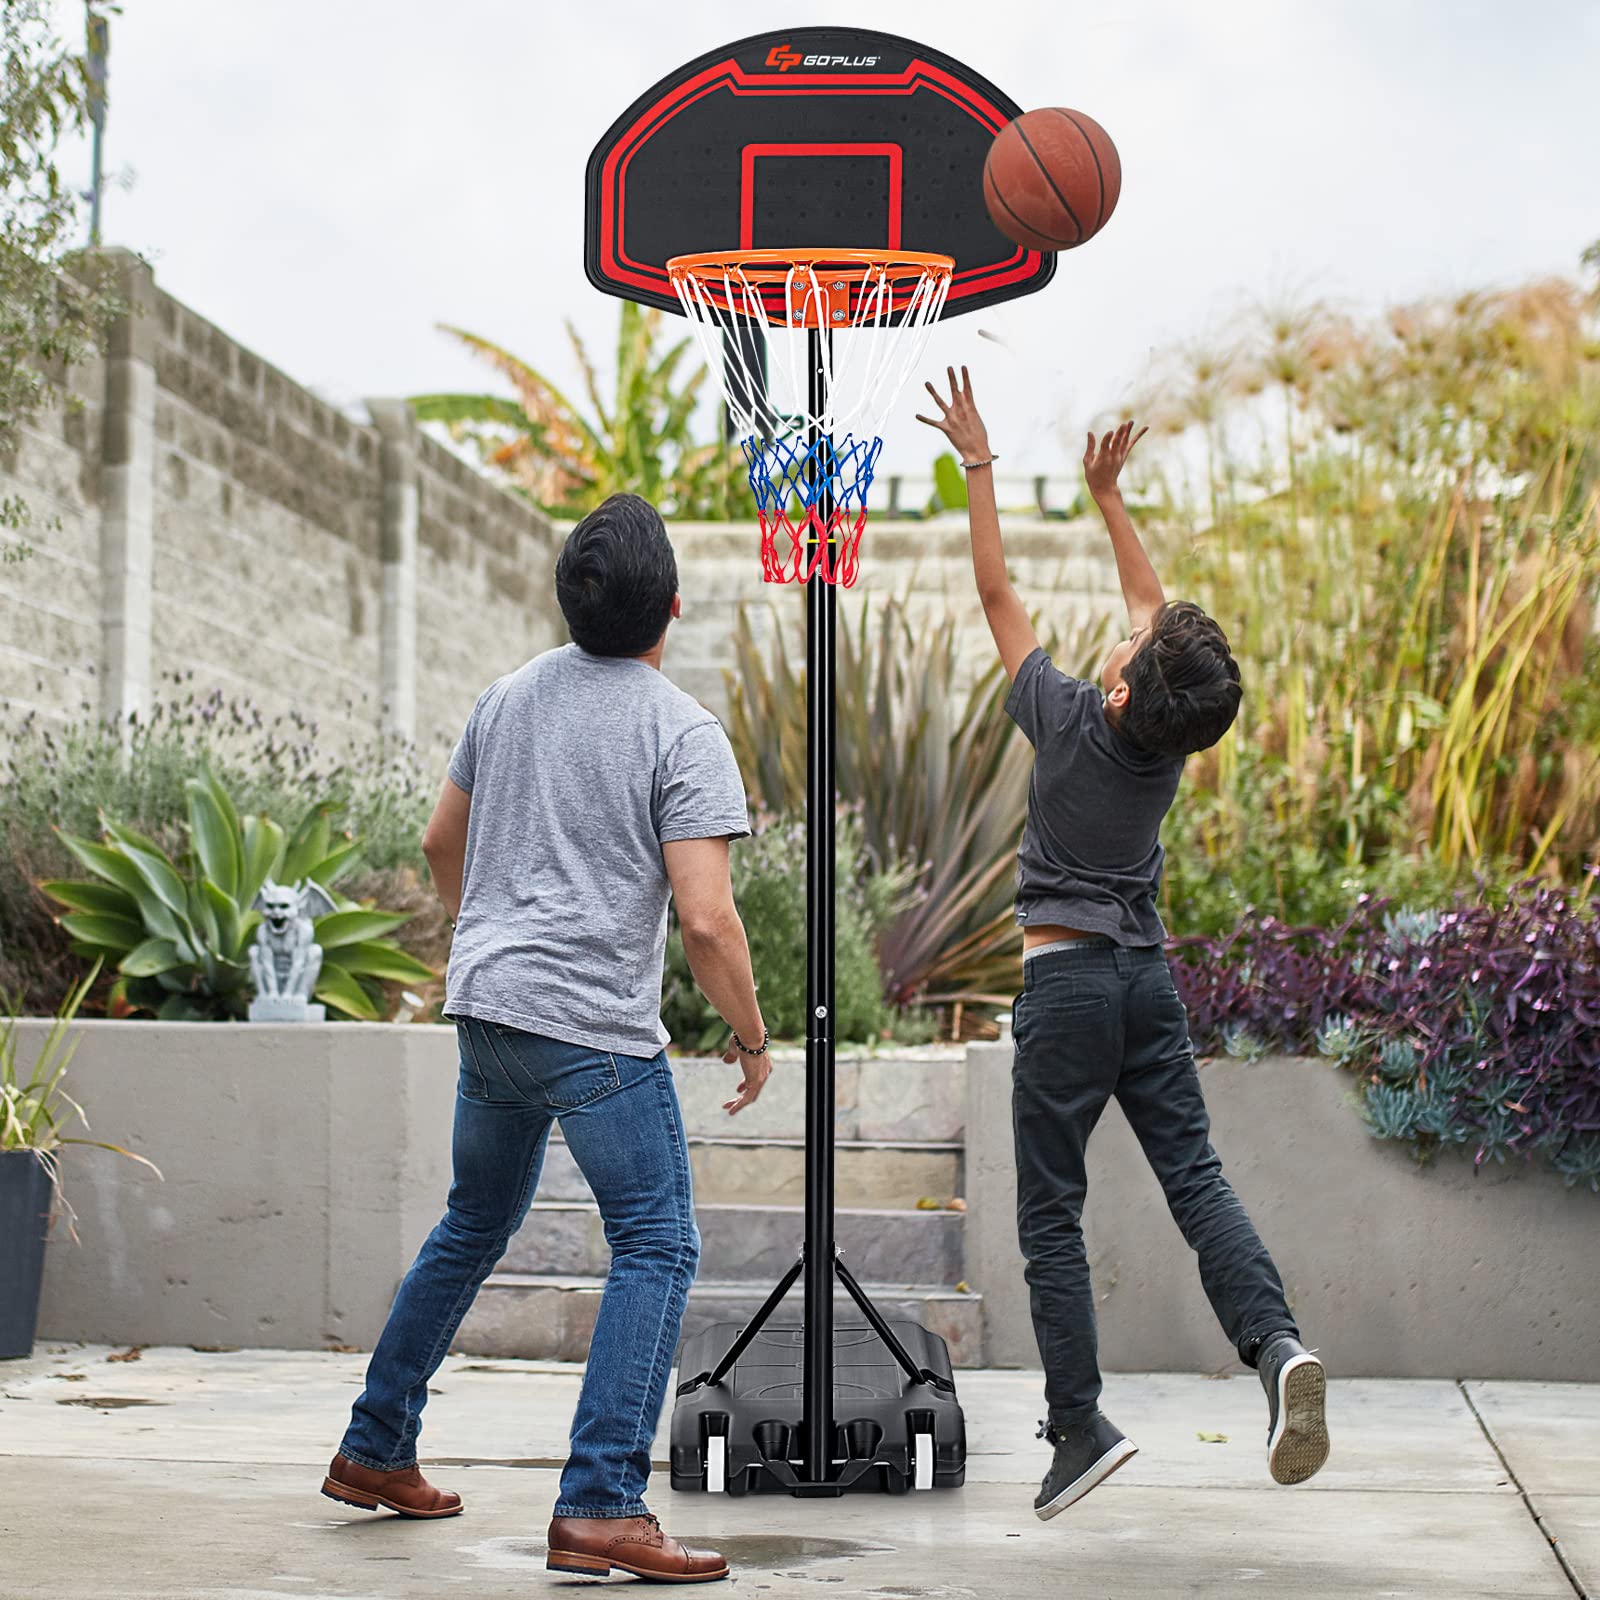 Goplus Portable Basketball Hoop Outdoor, 6.3FT-8.1FT Height Adjustable 5-Level Basketball Stand System with Shatterproof Backboard